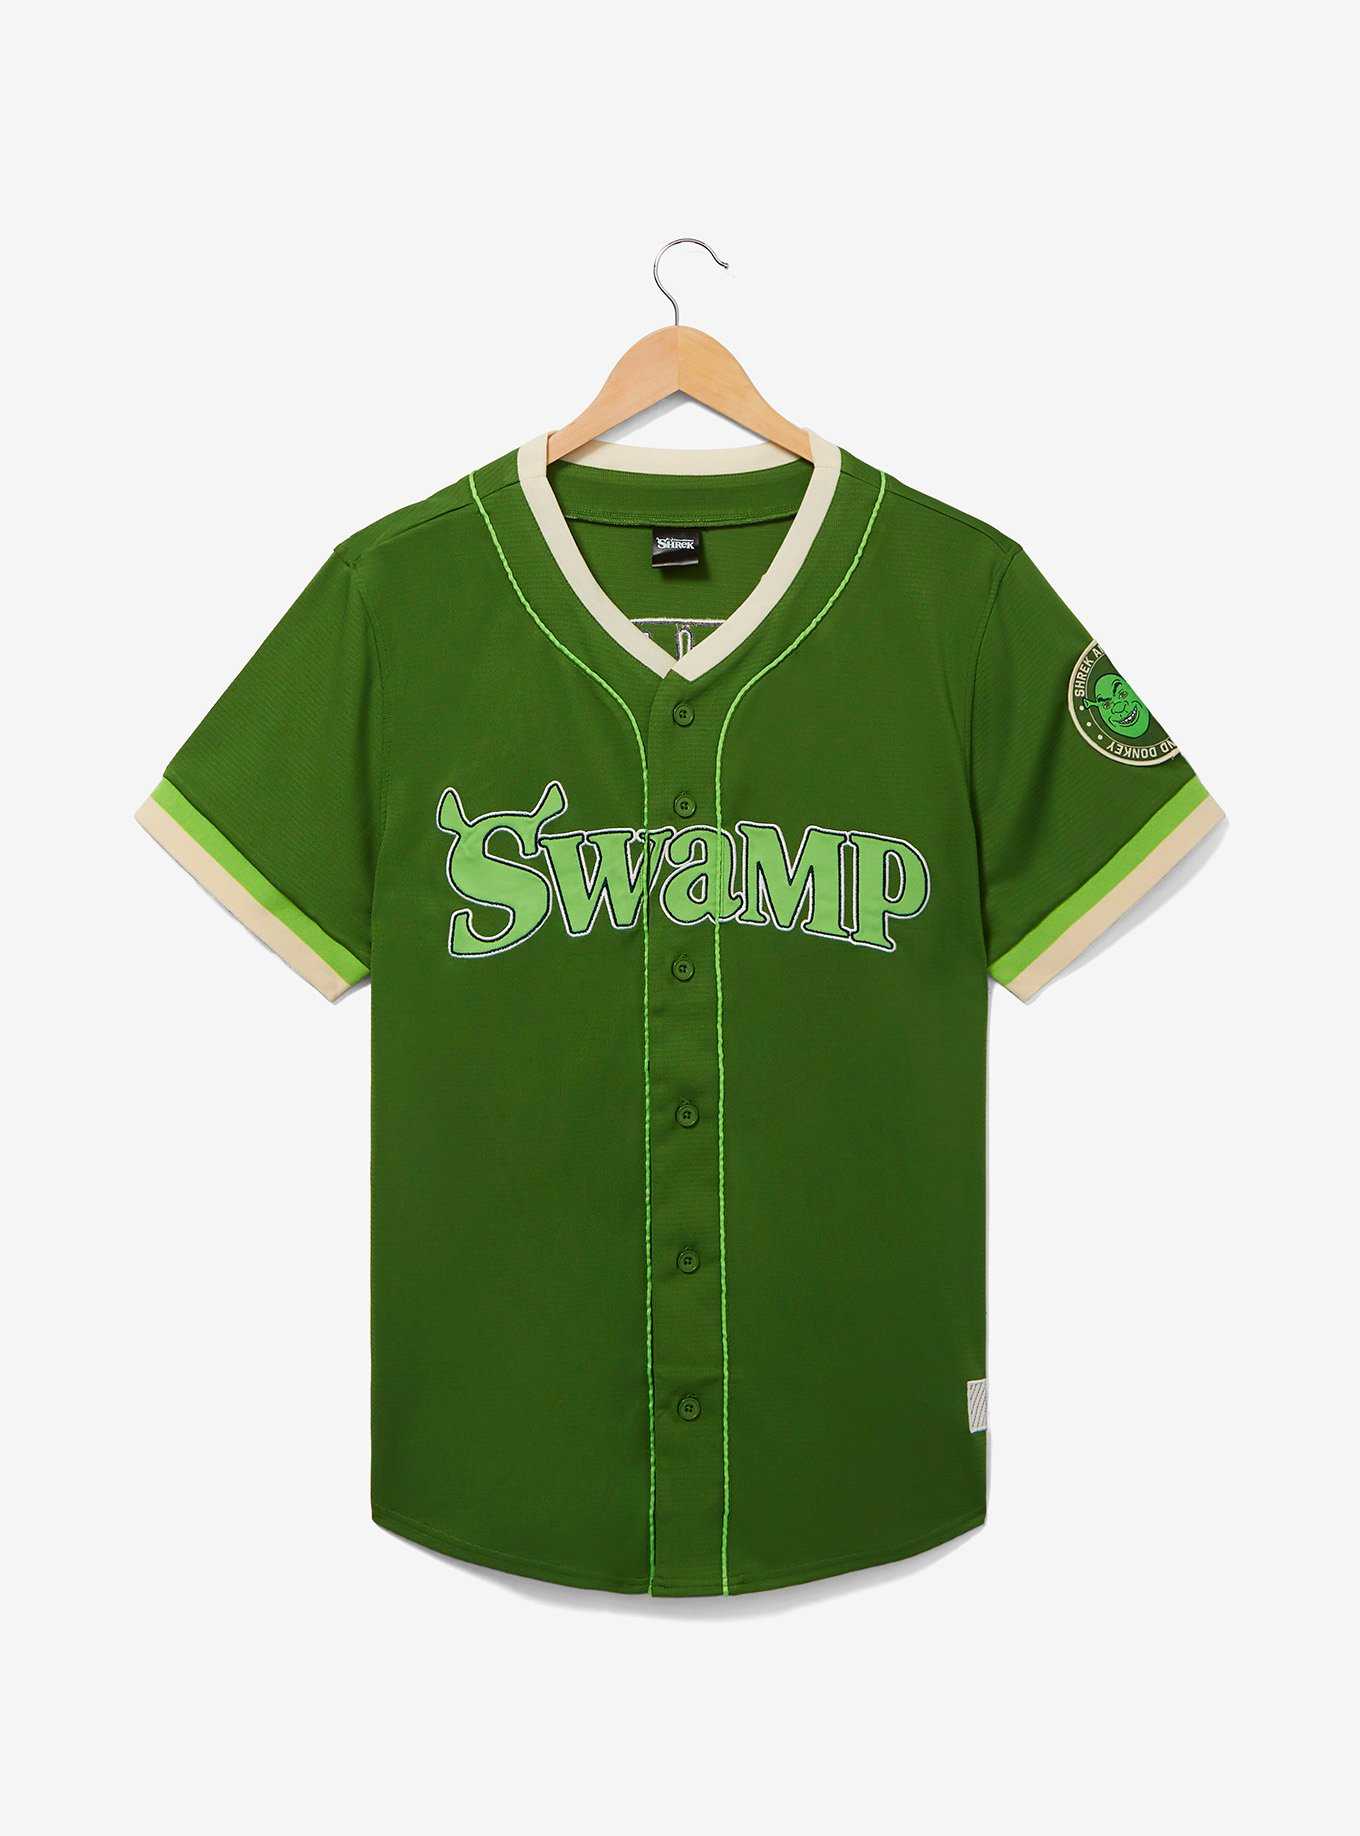 Shrek Swamp Baseball Jersey - BoxLunch Exclusive, , hi-res